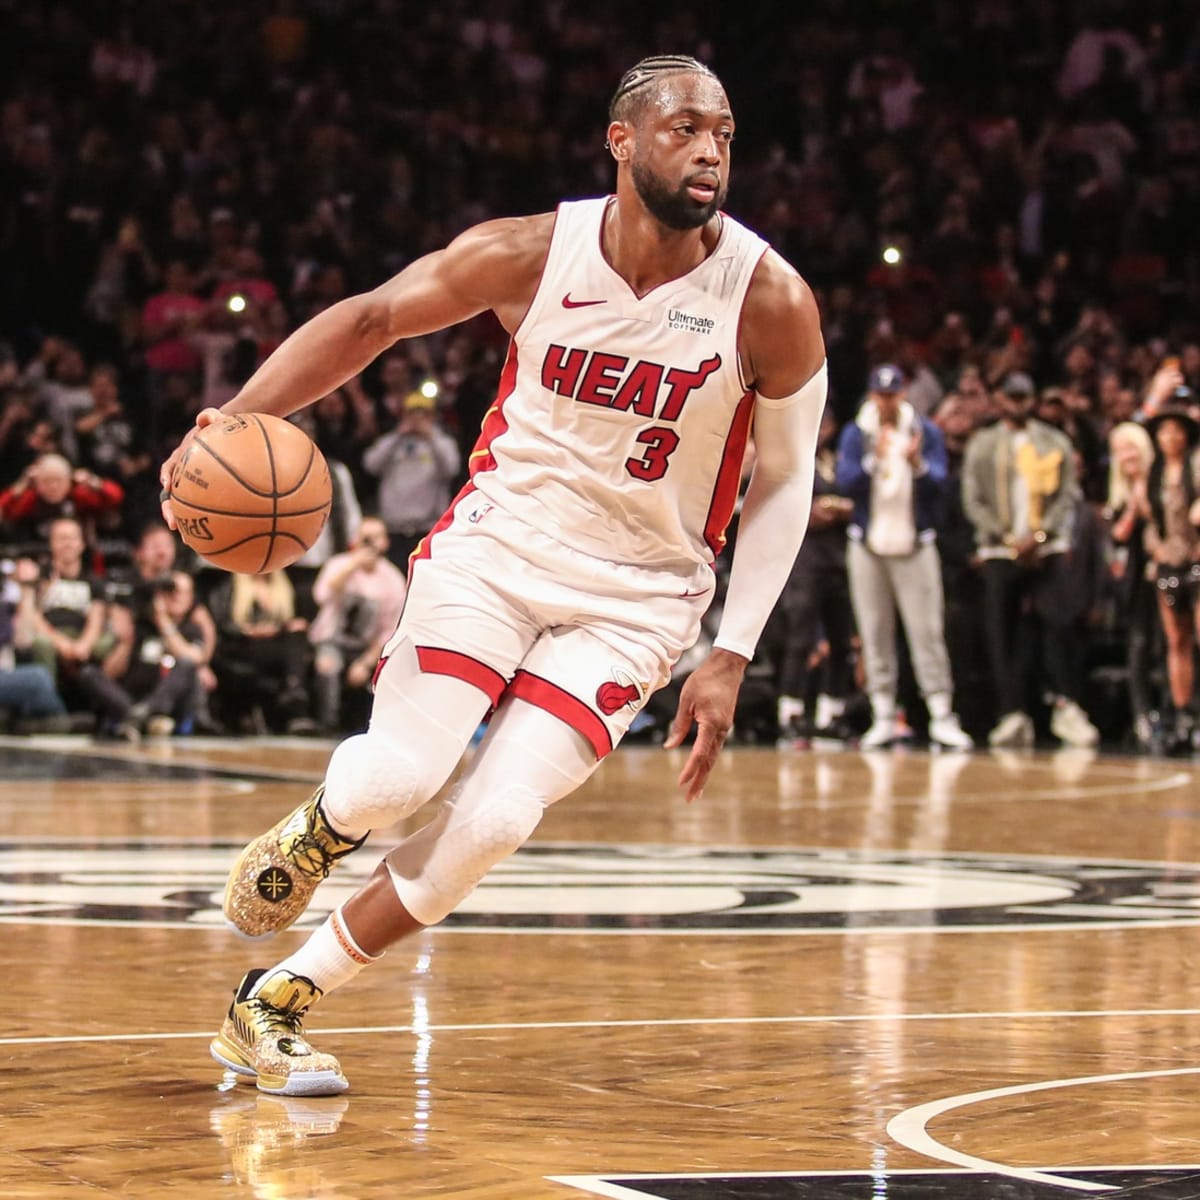 Miami Heat Retired Dwayne Wade's Jersey! by Sports GIFs